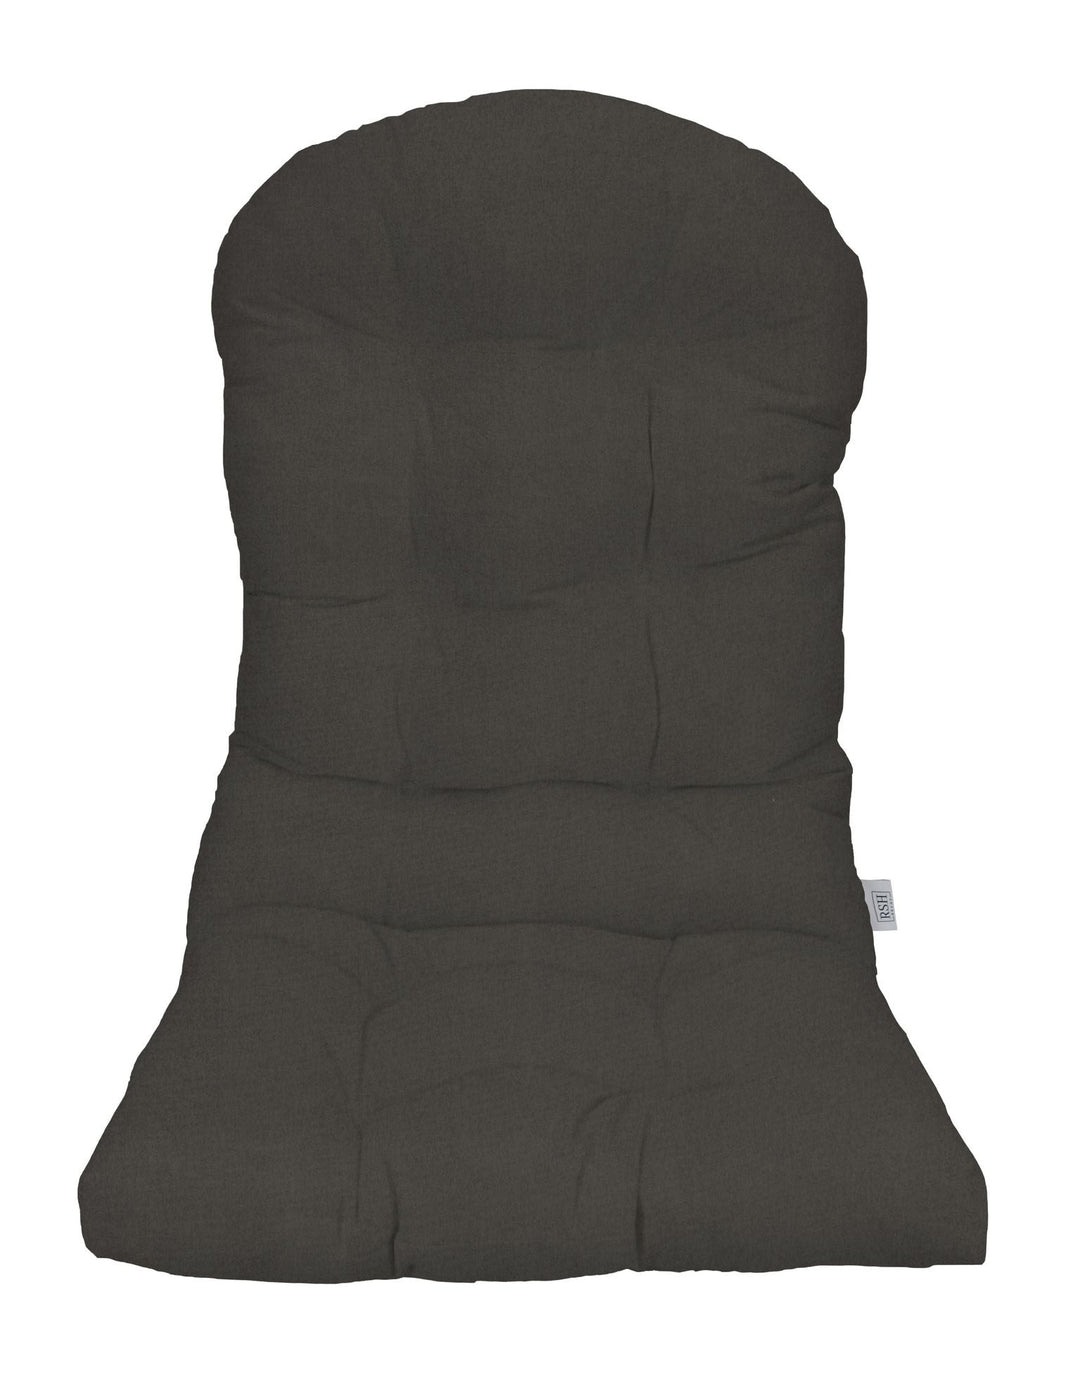 Tufted Adirondack Cushion | 42.5" H x 21" W | Sunbrella Performance Fabric | Sunbrella Canvas Charoal Grey - RSH Decor